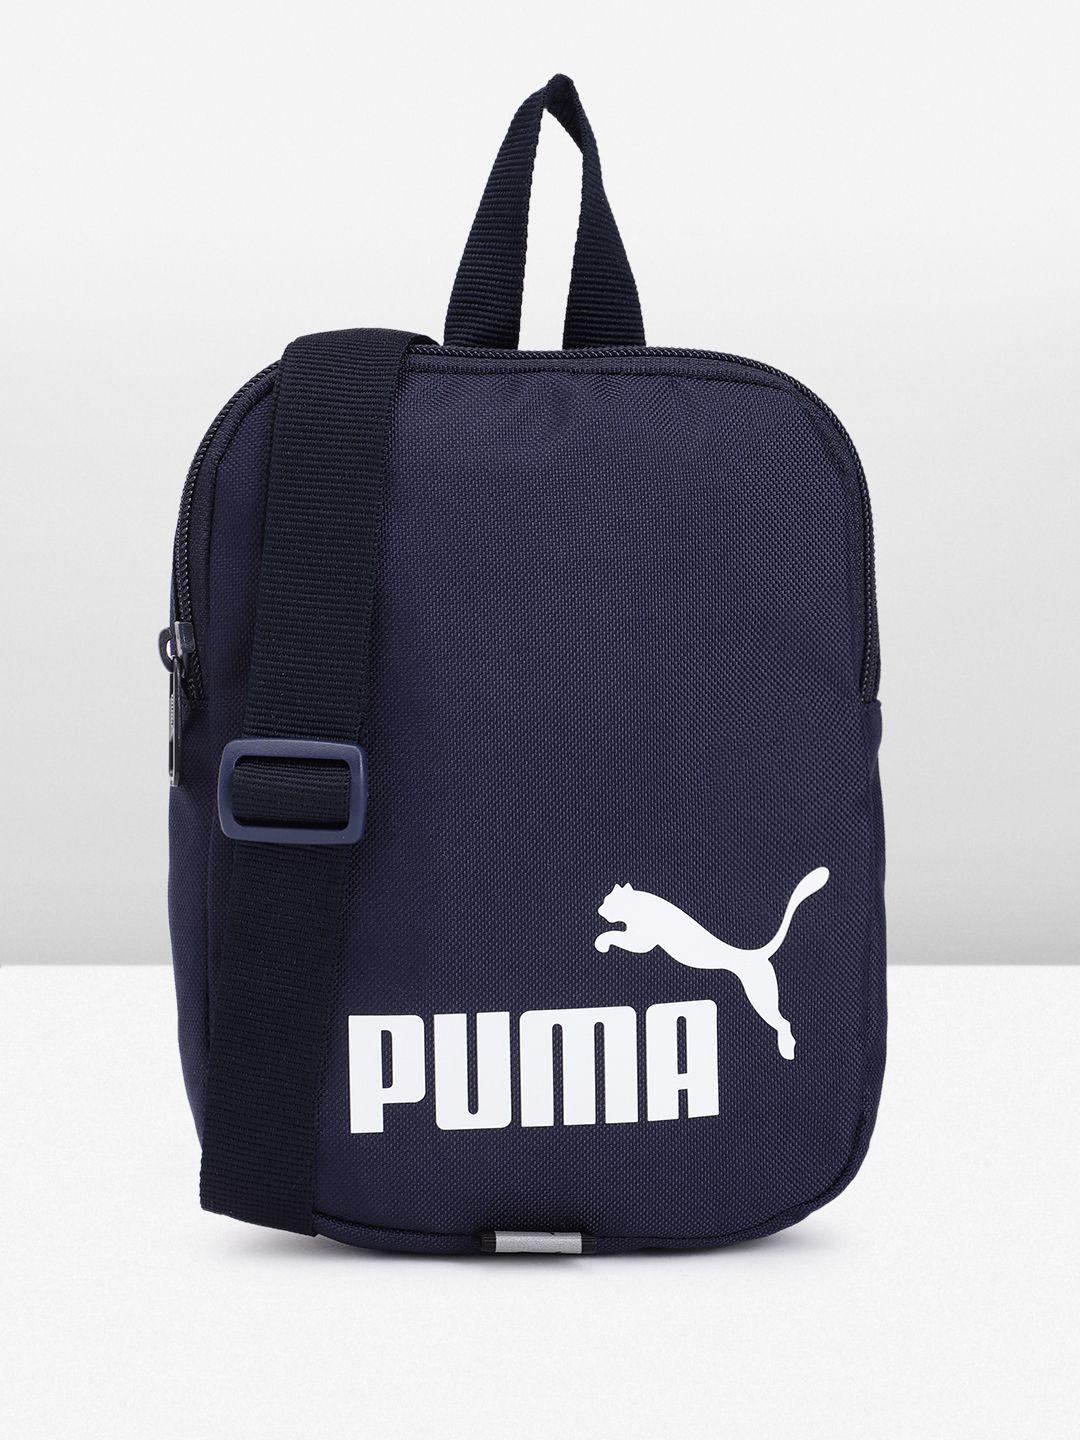 puma unisex brand logo printed structured messenger bag